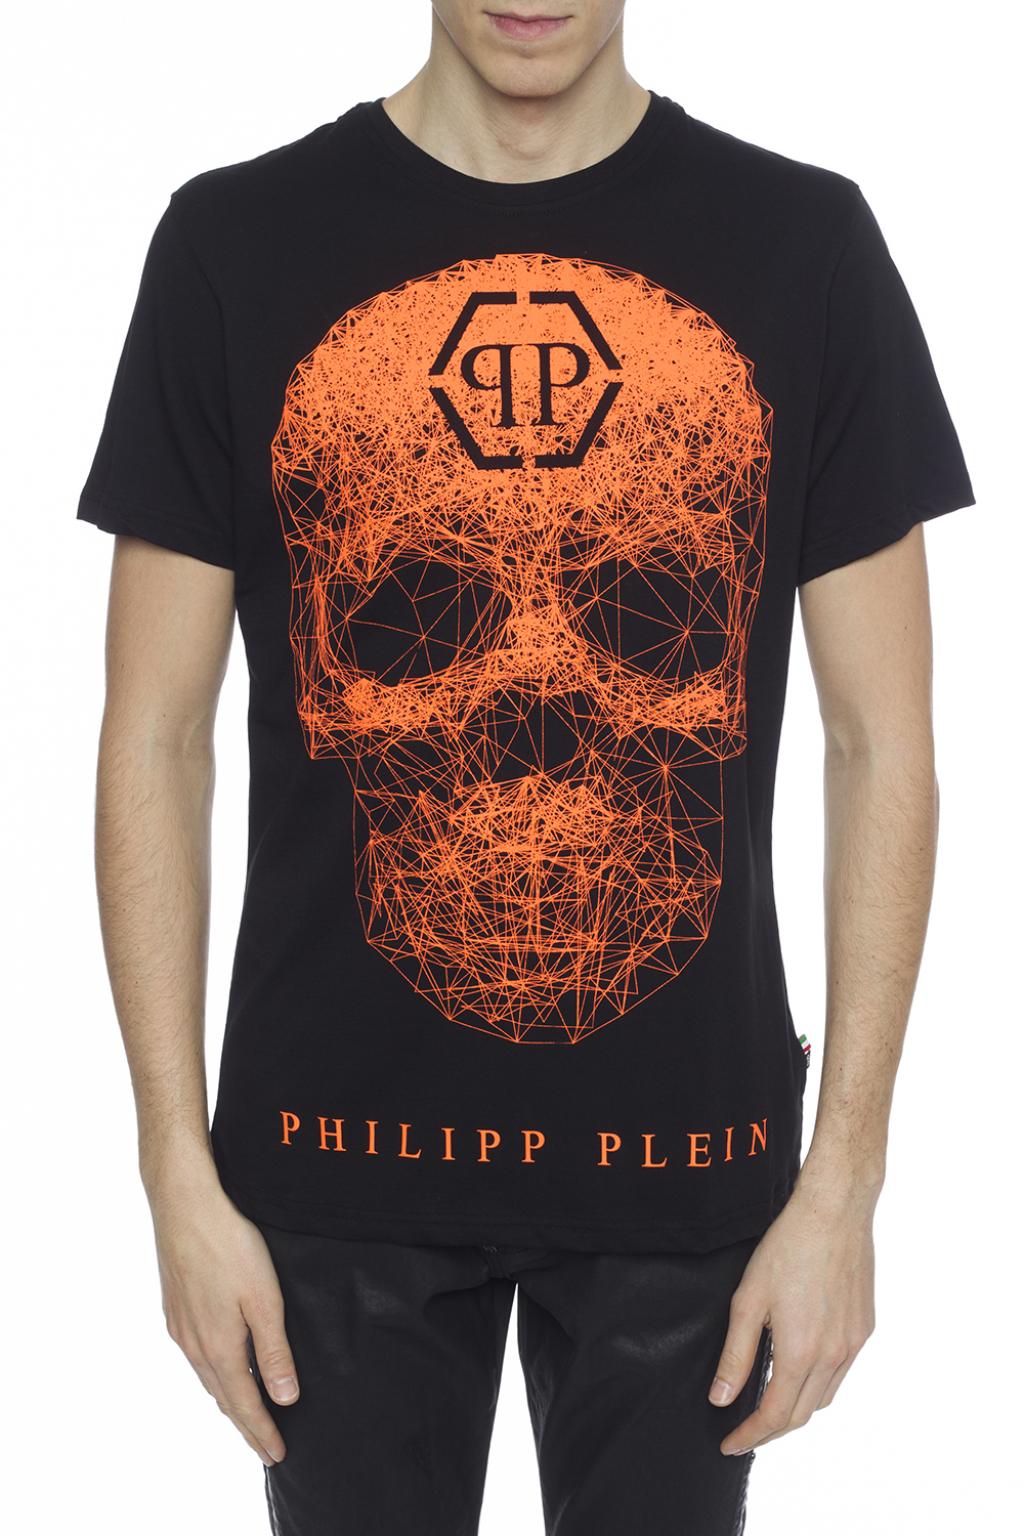 philipp plein t shirt orange